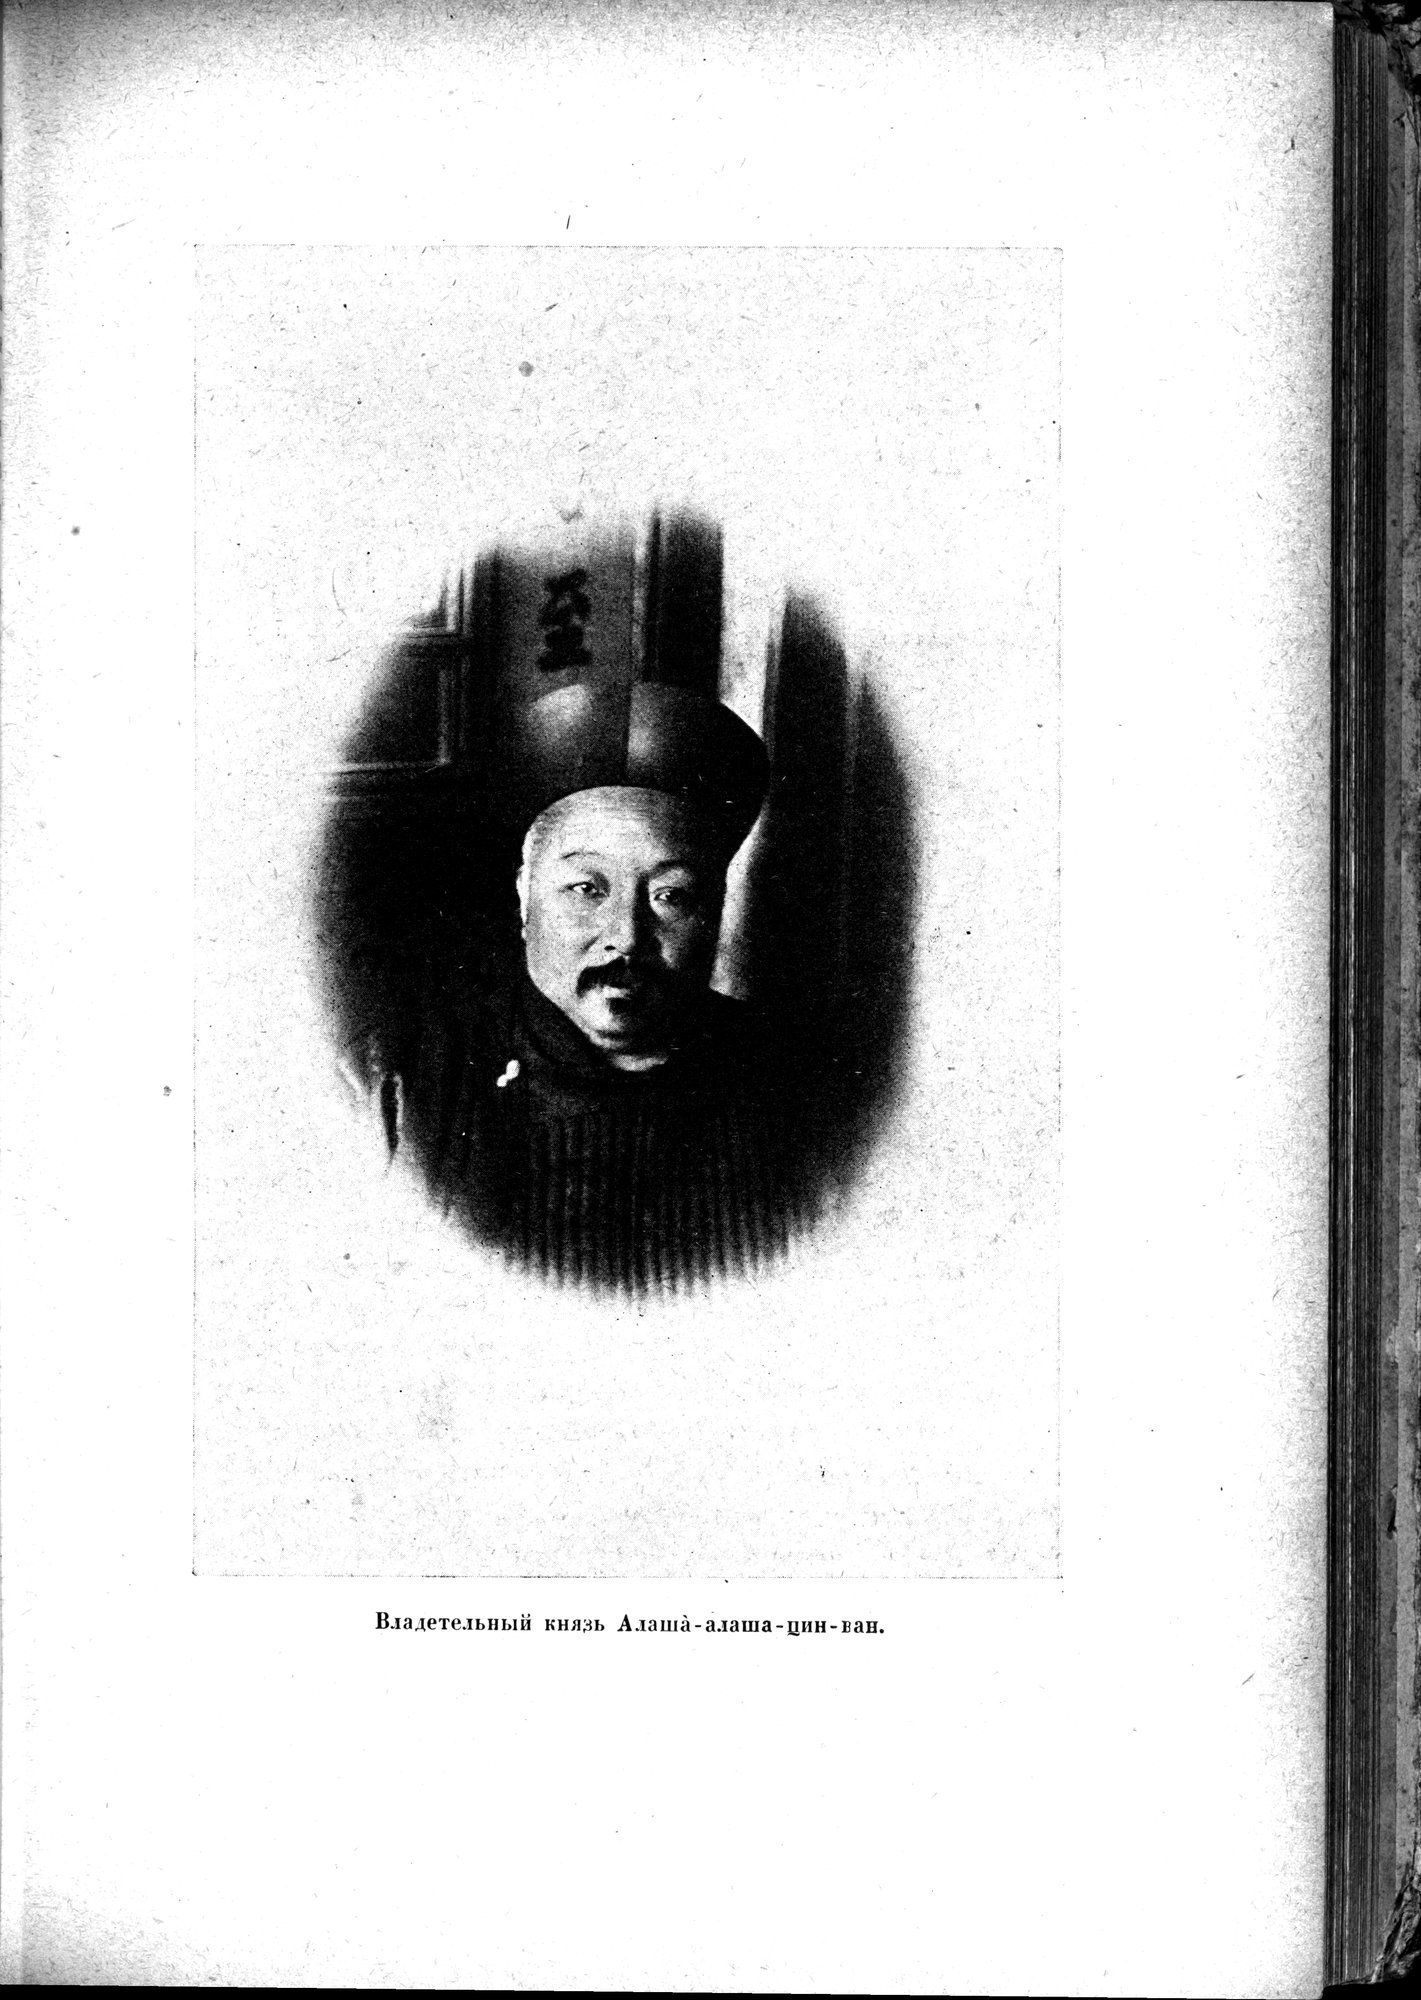 Mongoliya i Amdo i mertby gorod Khara-Khoto : vol.1 / Page 203 (Grayscale High Resolution Image)